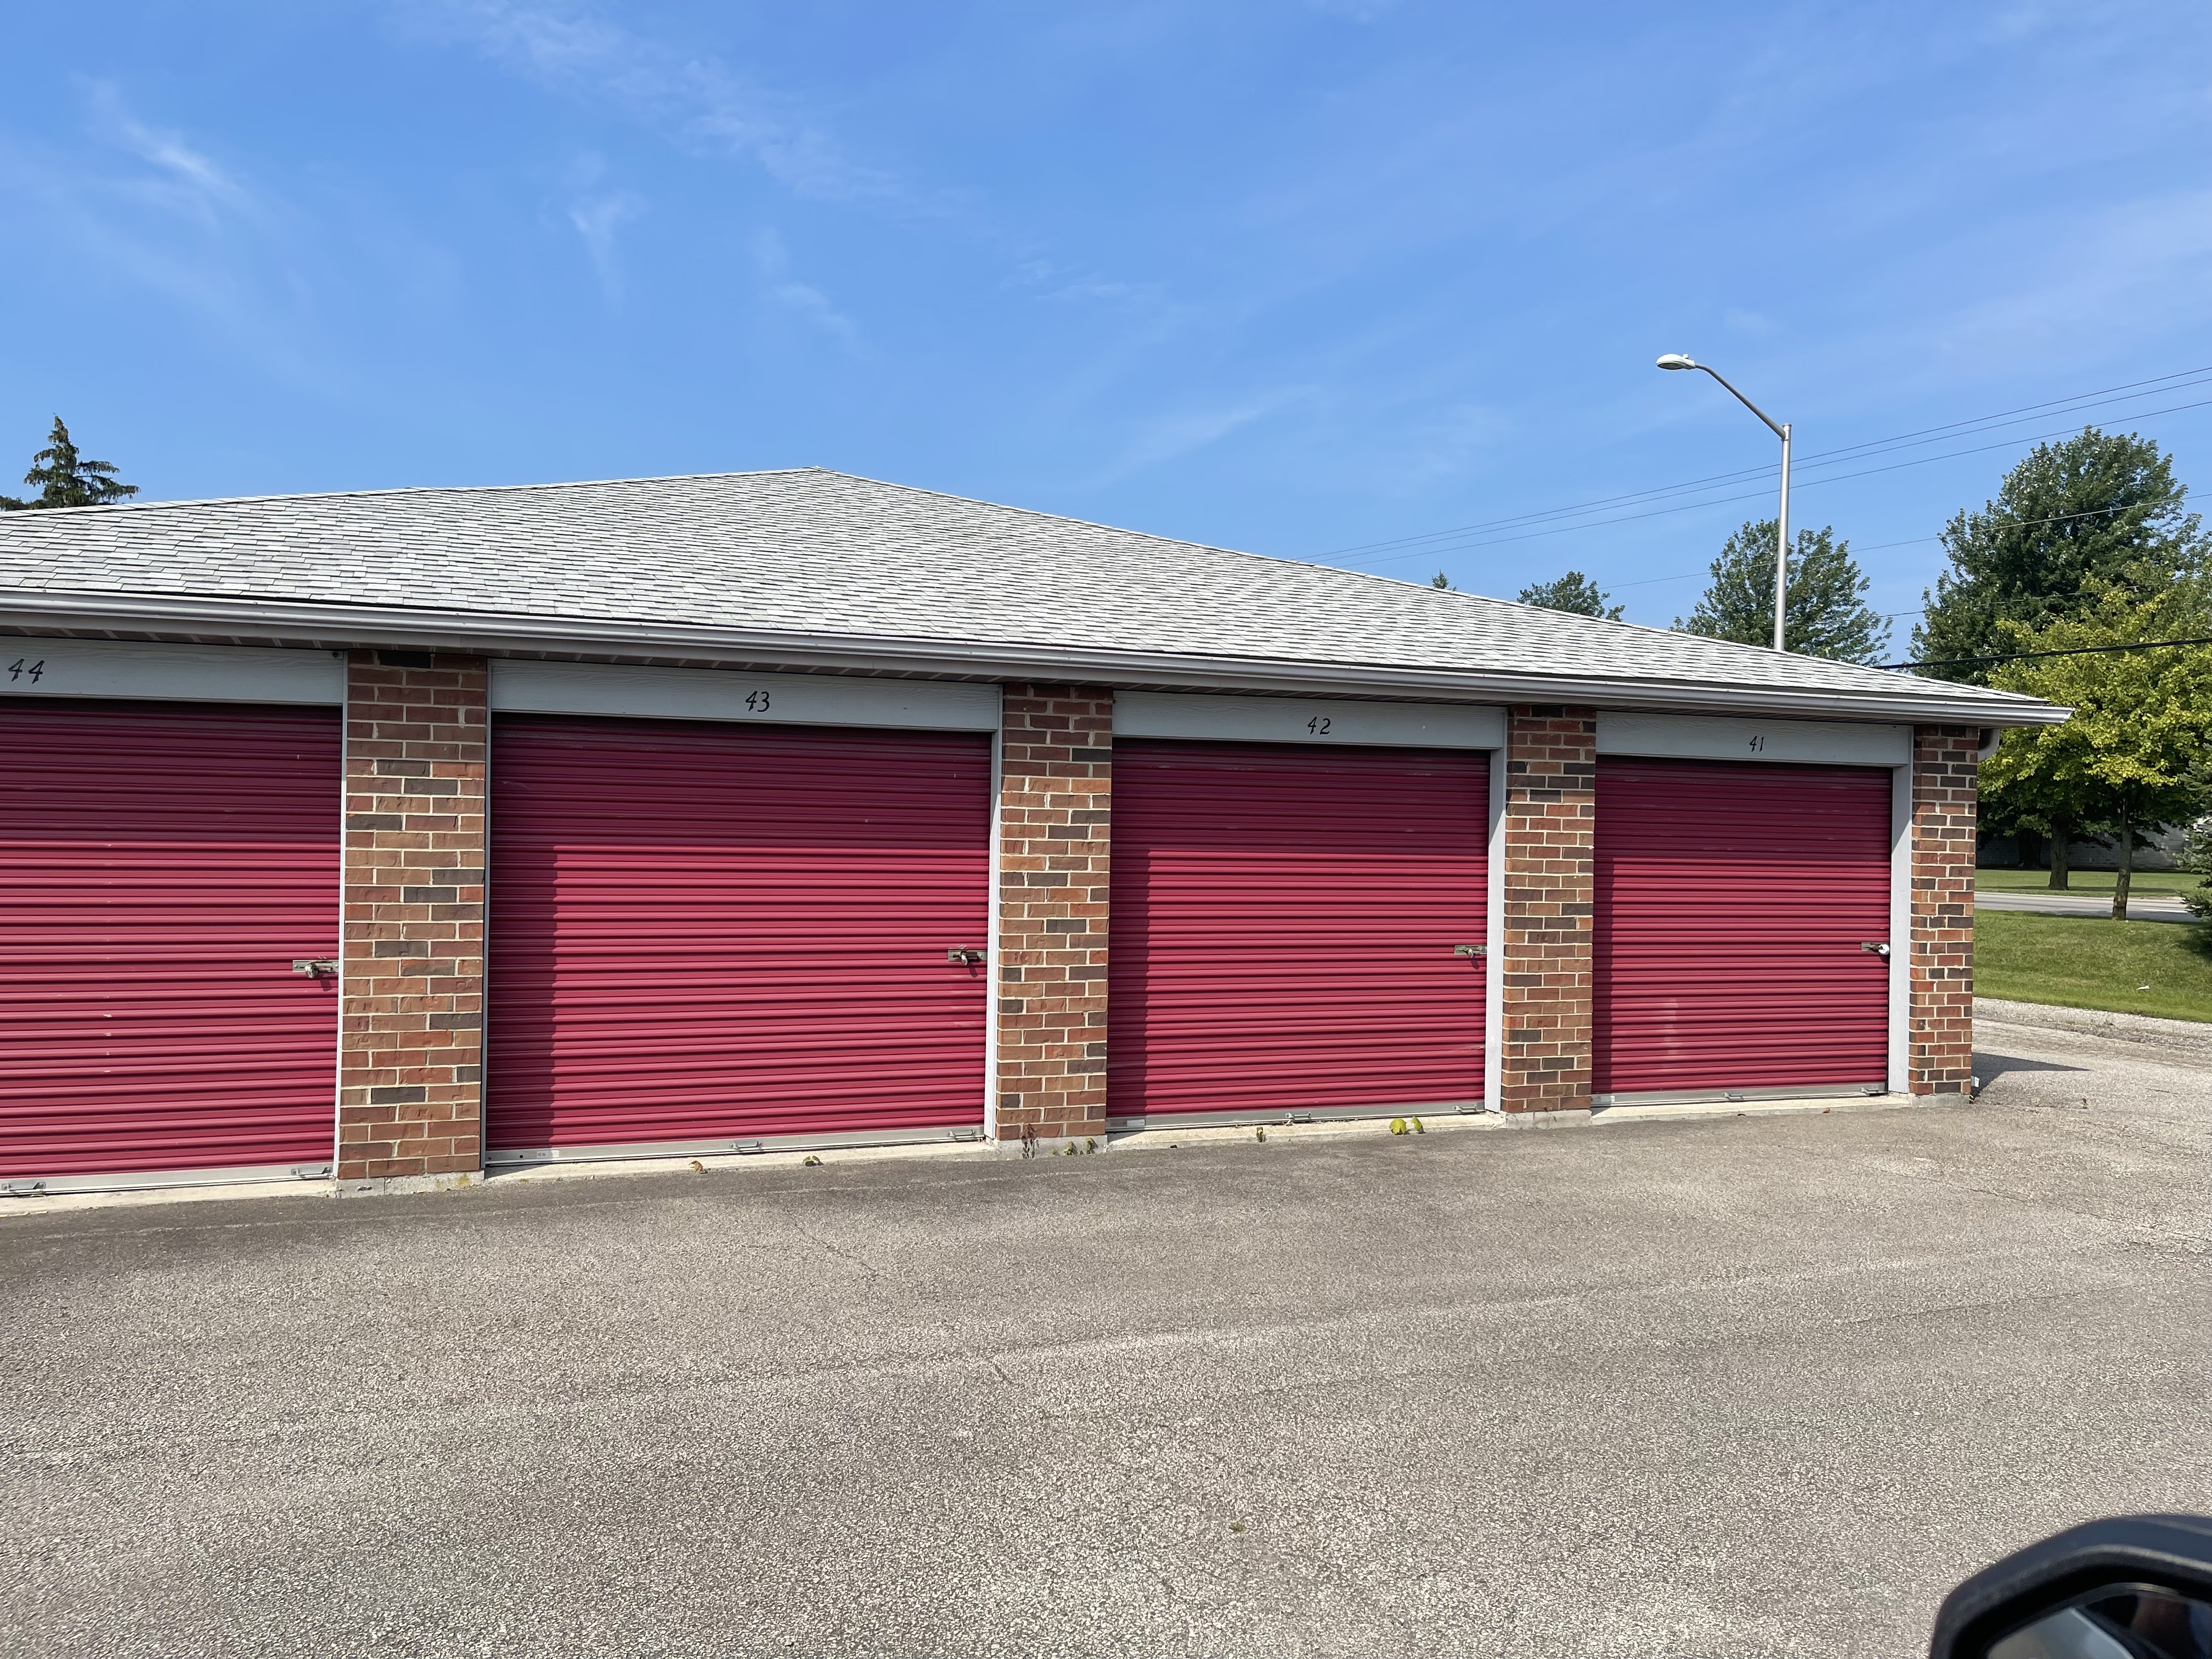 Buckeye Storage - Drive-Up Storage Units in Delaware, OH